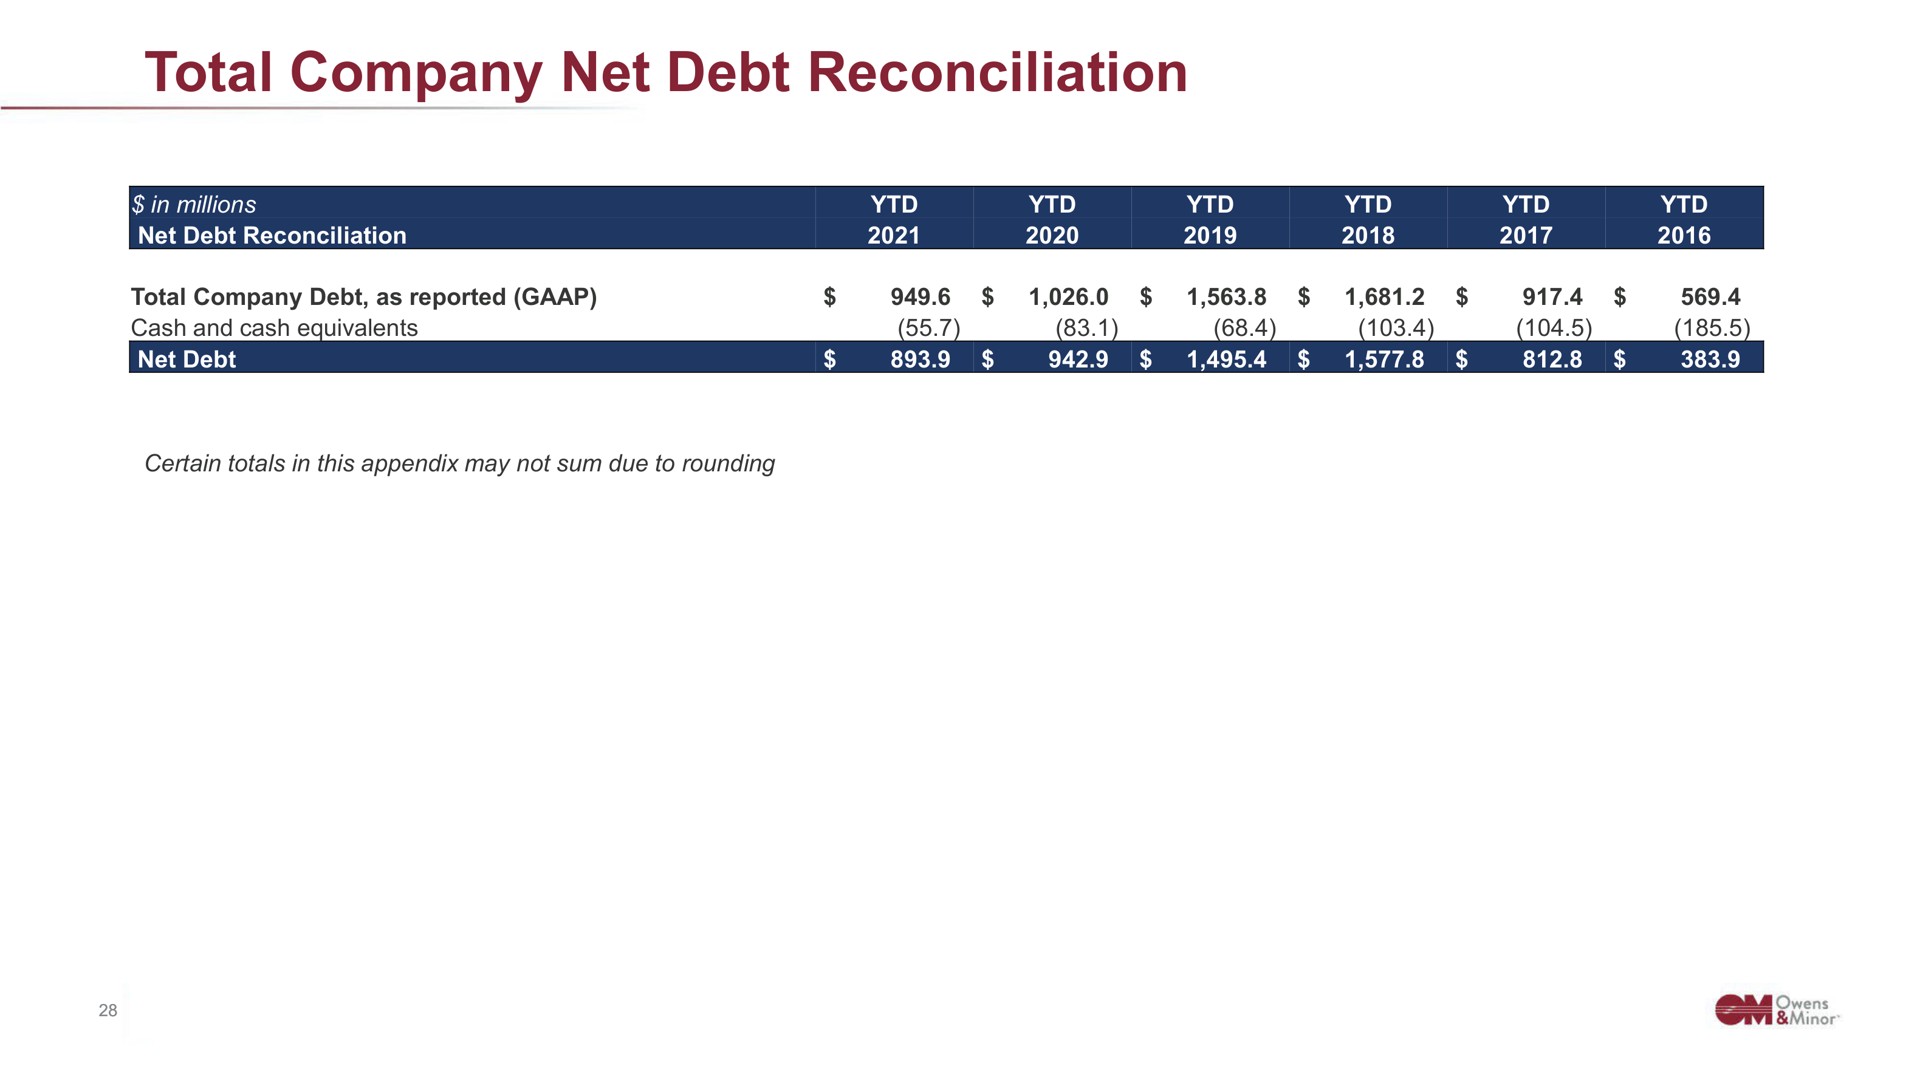 total company net debt reconciliation | Owens&Minor